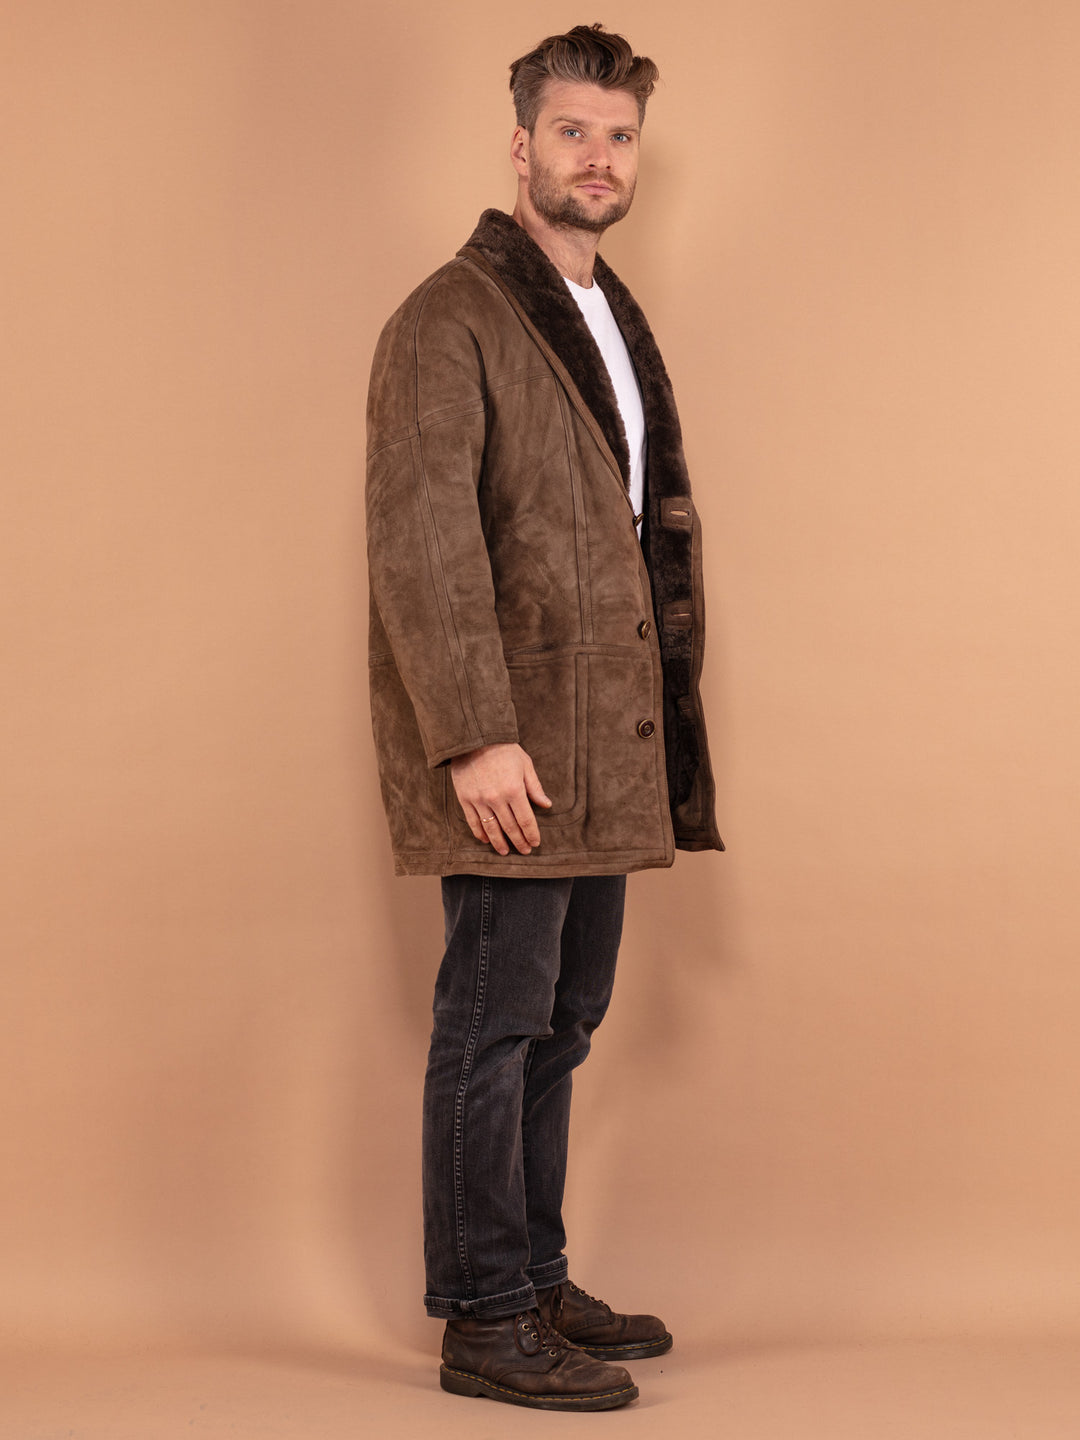 Men's Sheepskin Coat, Size Medium M Shearling Coat, 80's Vintage Coat, Winter Clothing, Brown Suede Coat, Vintage Overcoat, Made in Spain